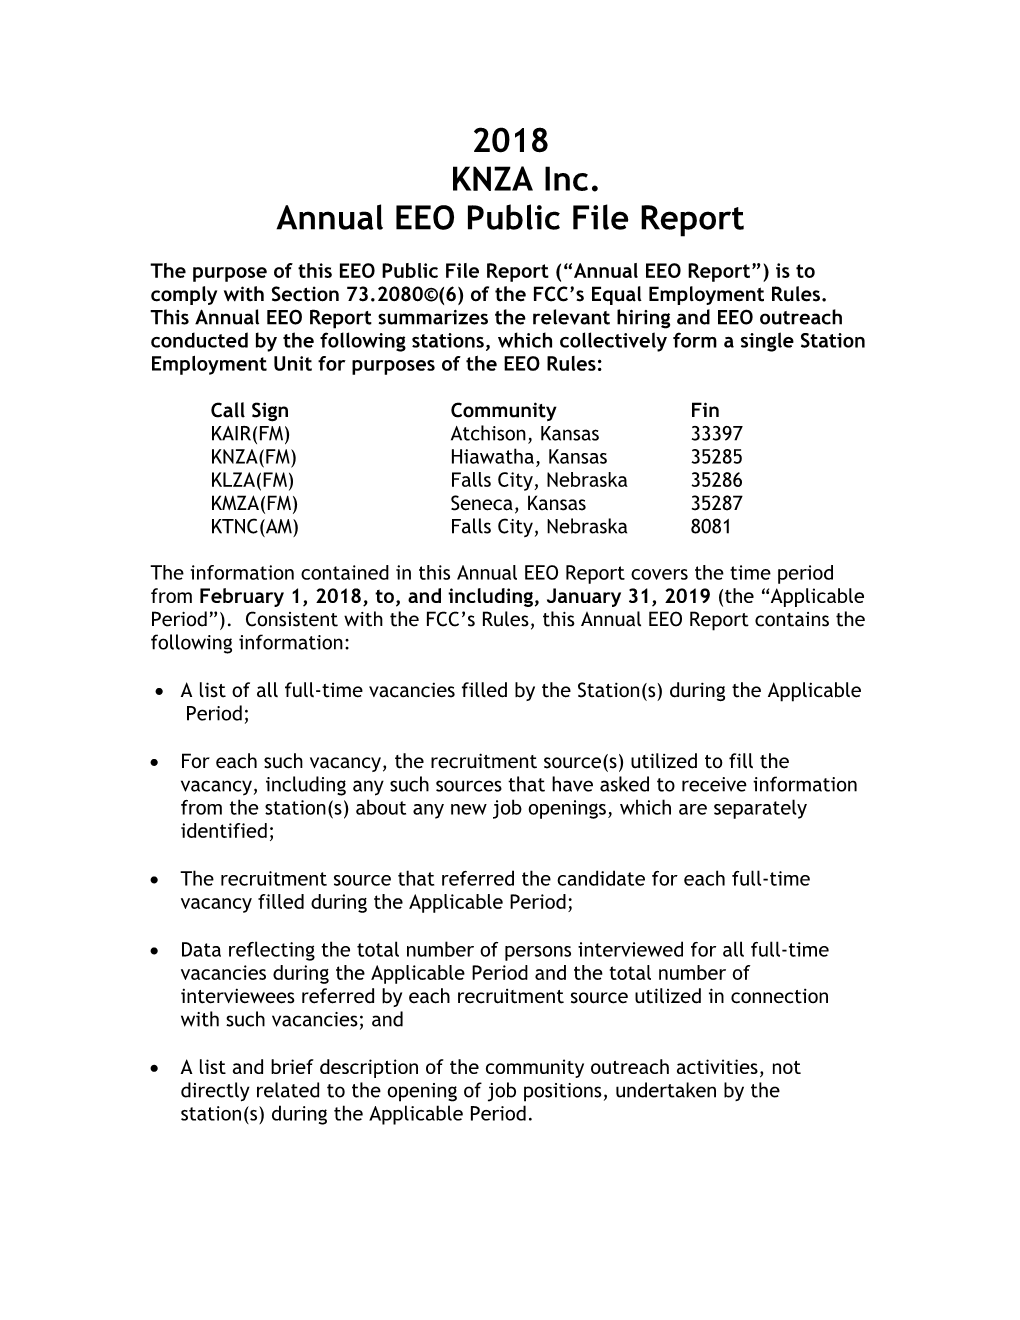 2018 KNZA Inc. Annual EEO Public File Report